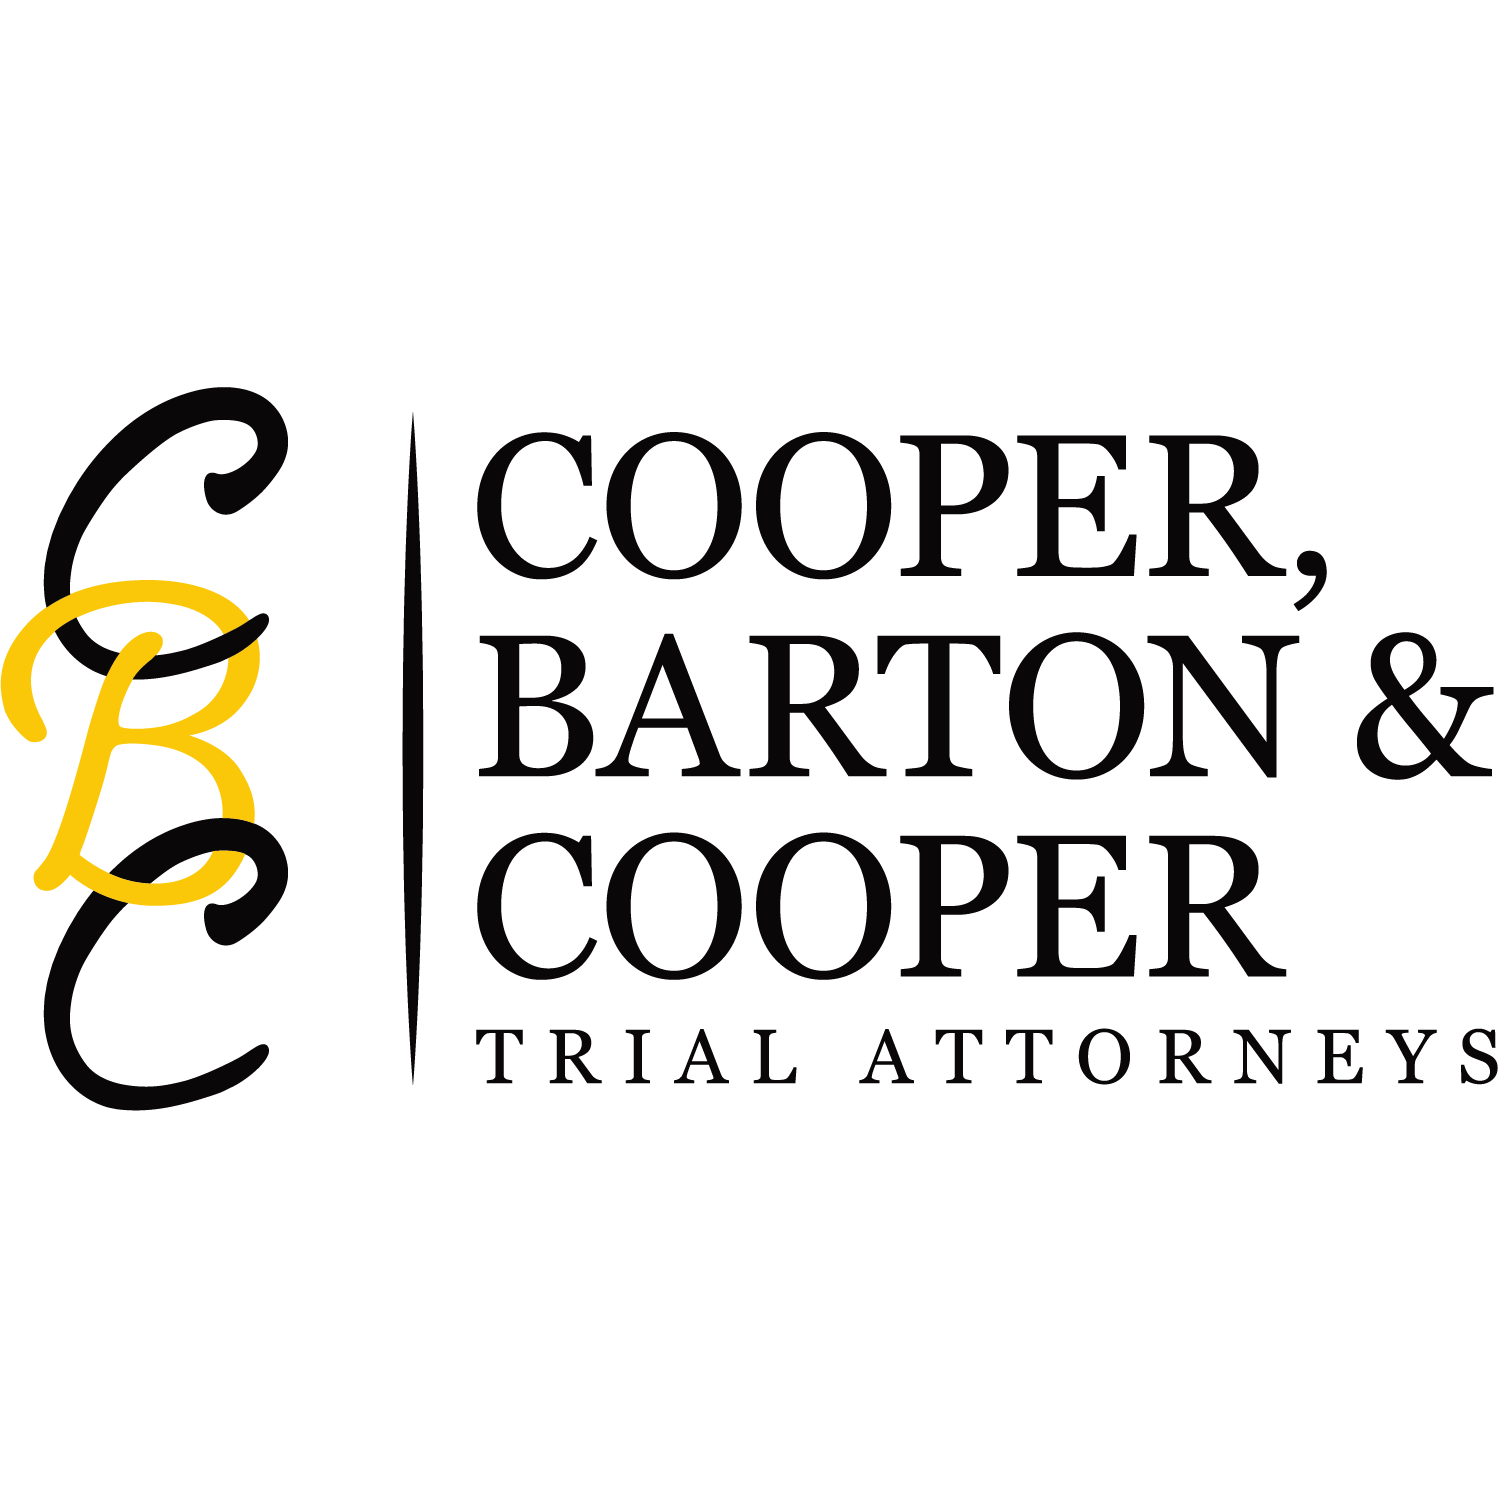 Cooper, Barton & Cooper - Macon, GA 31201 - (478)202-7050 | ShowMeLocal.com